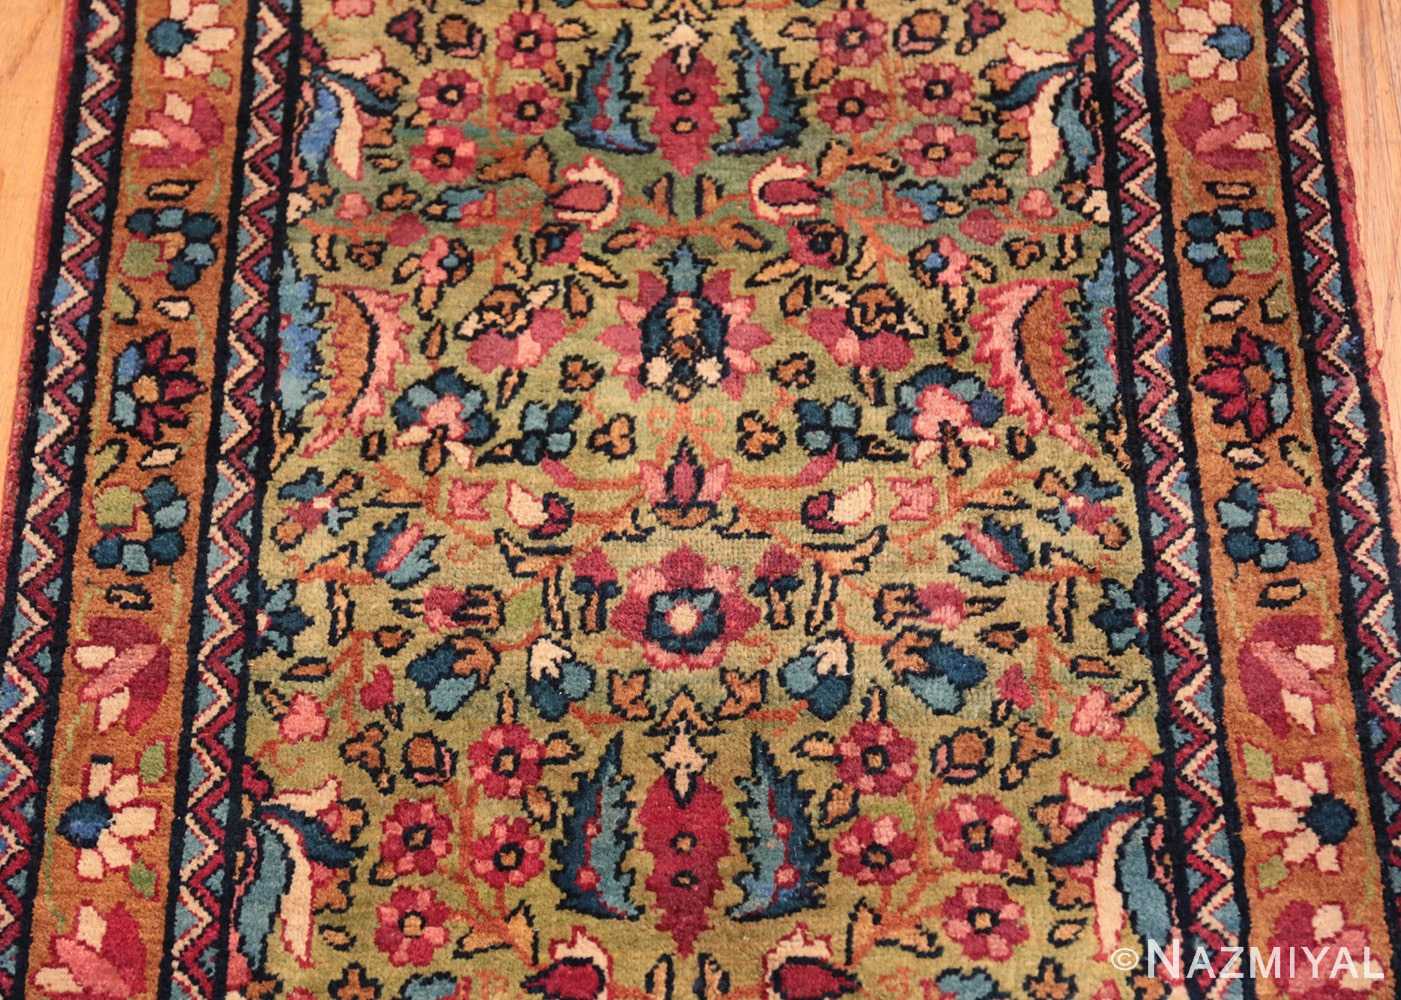 Field Antique Kerman Persian rug 70165 by Nazmiyal